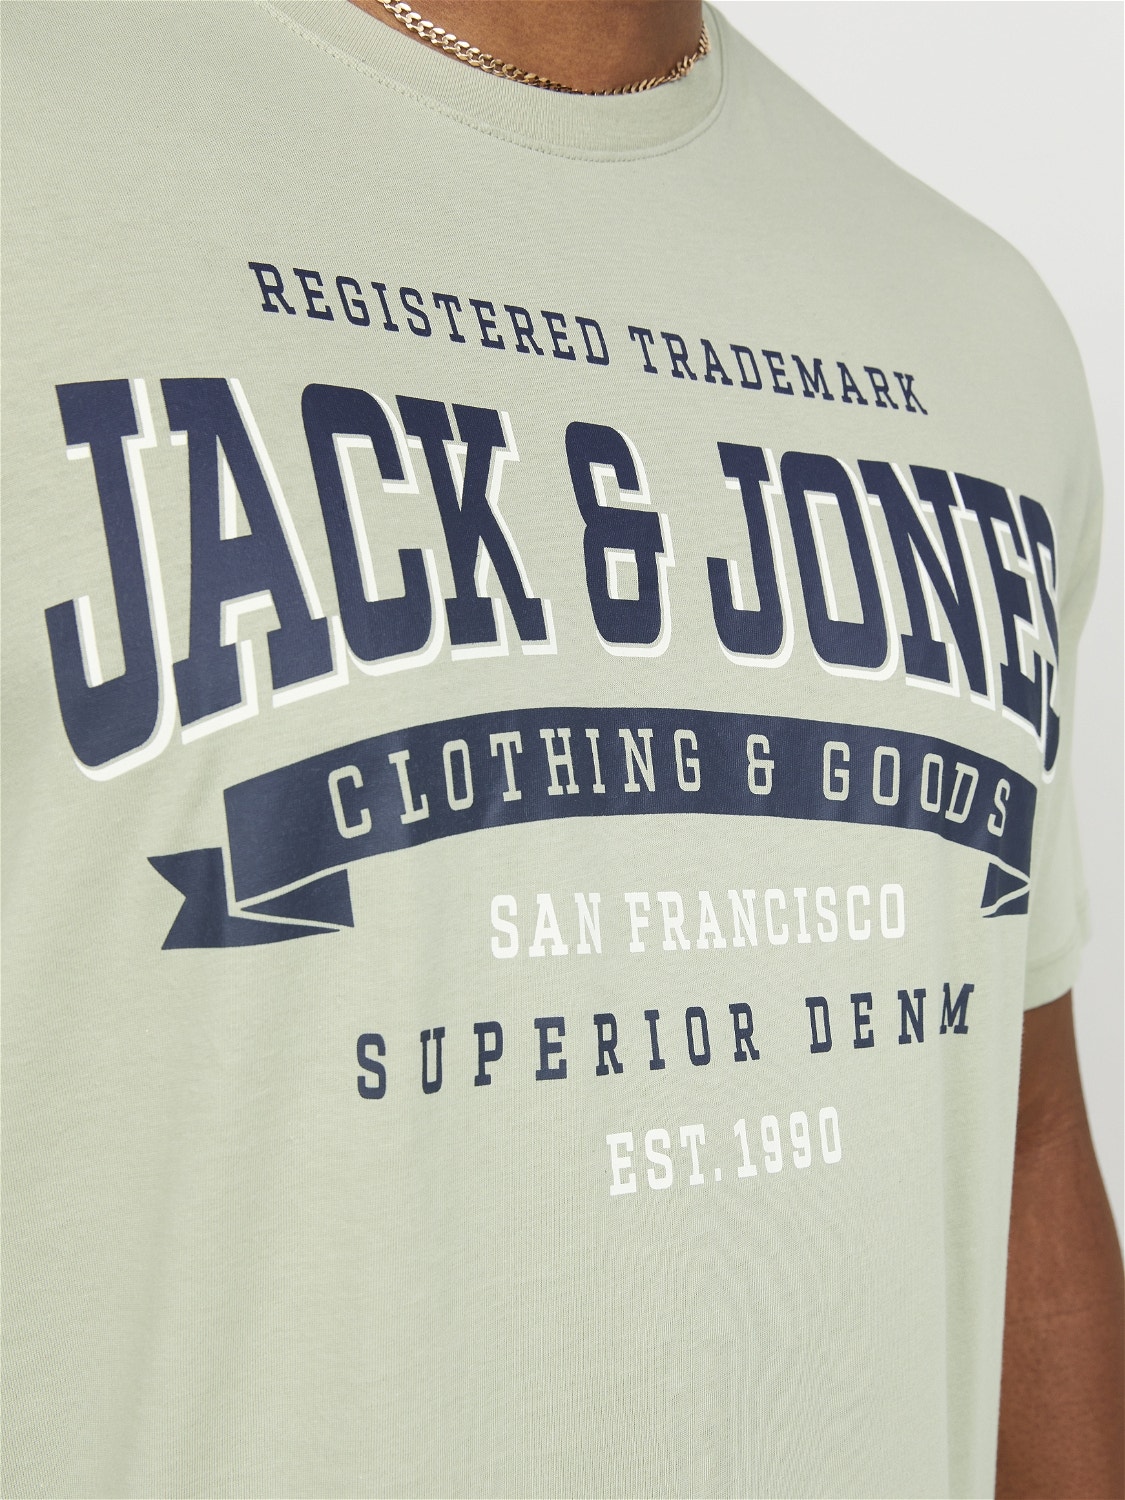 Jack & Jones Καλοκαιρινό μπλουζάκι -Desert Sage - 12243611